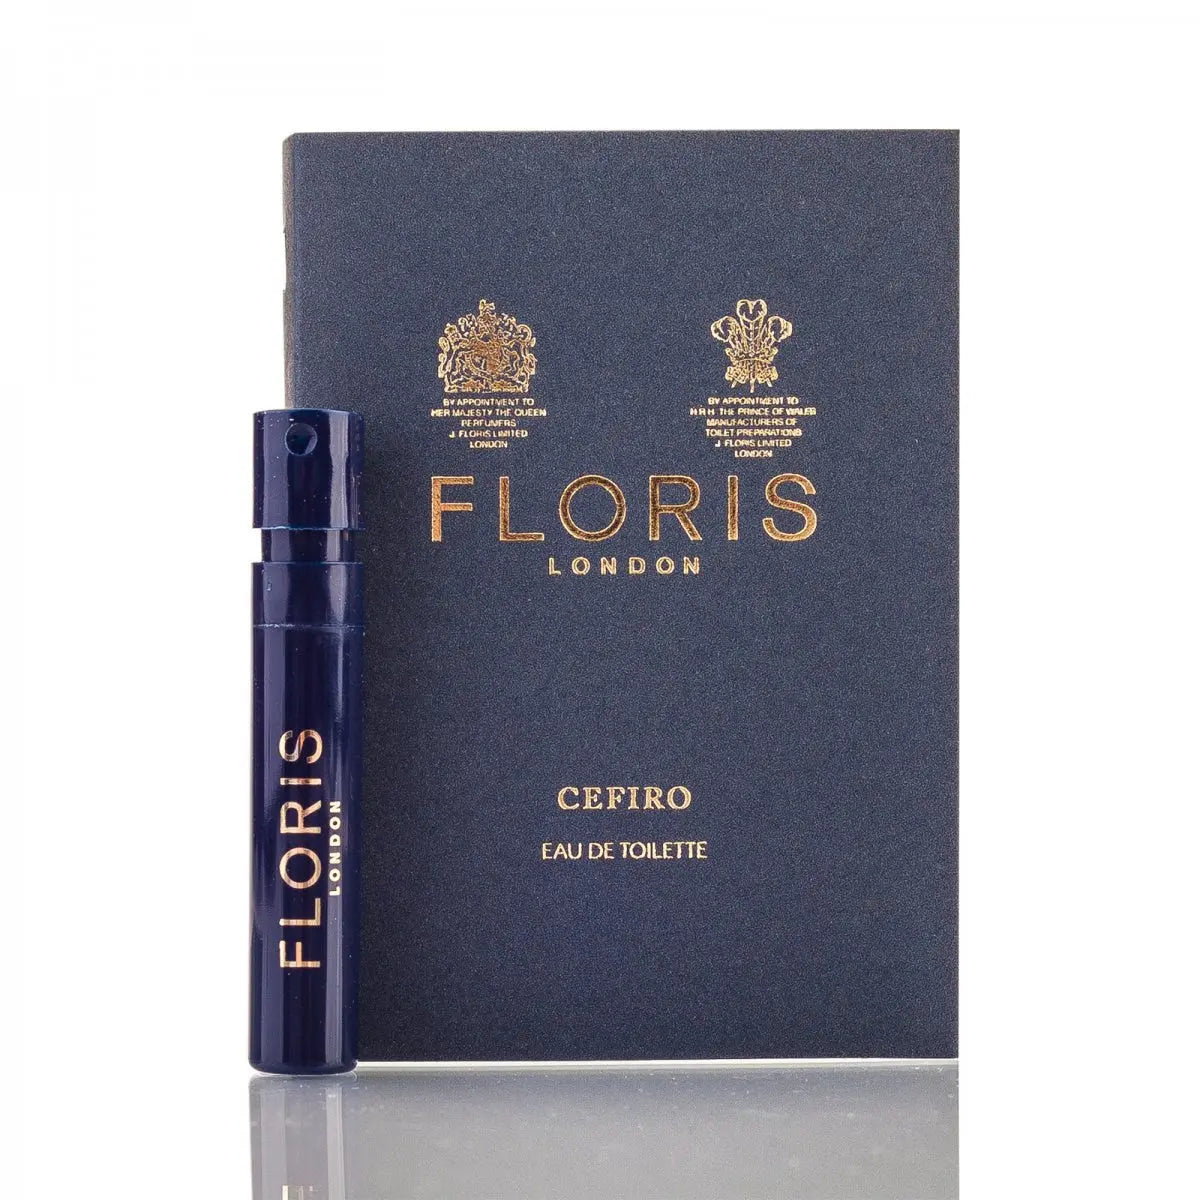 Floris Cefiro 1.2 ml Sample Fragrance sample